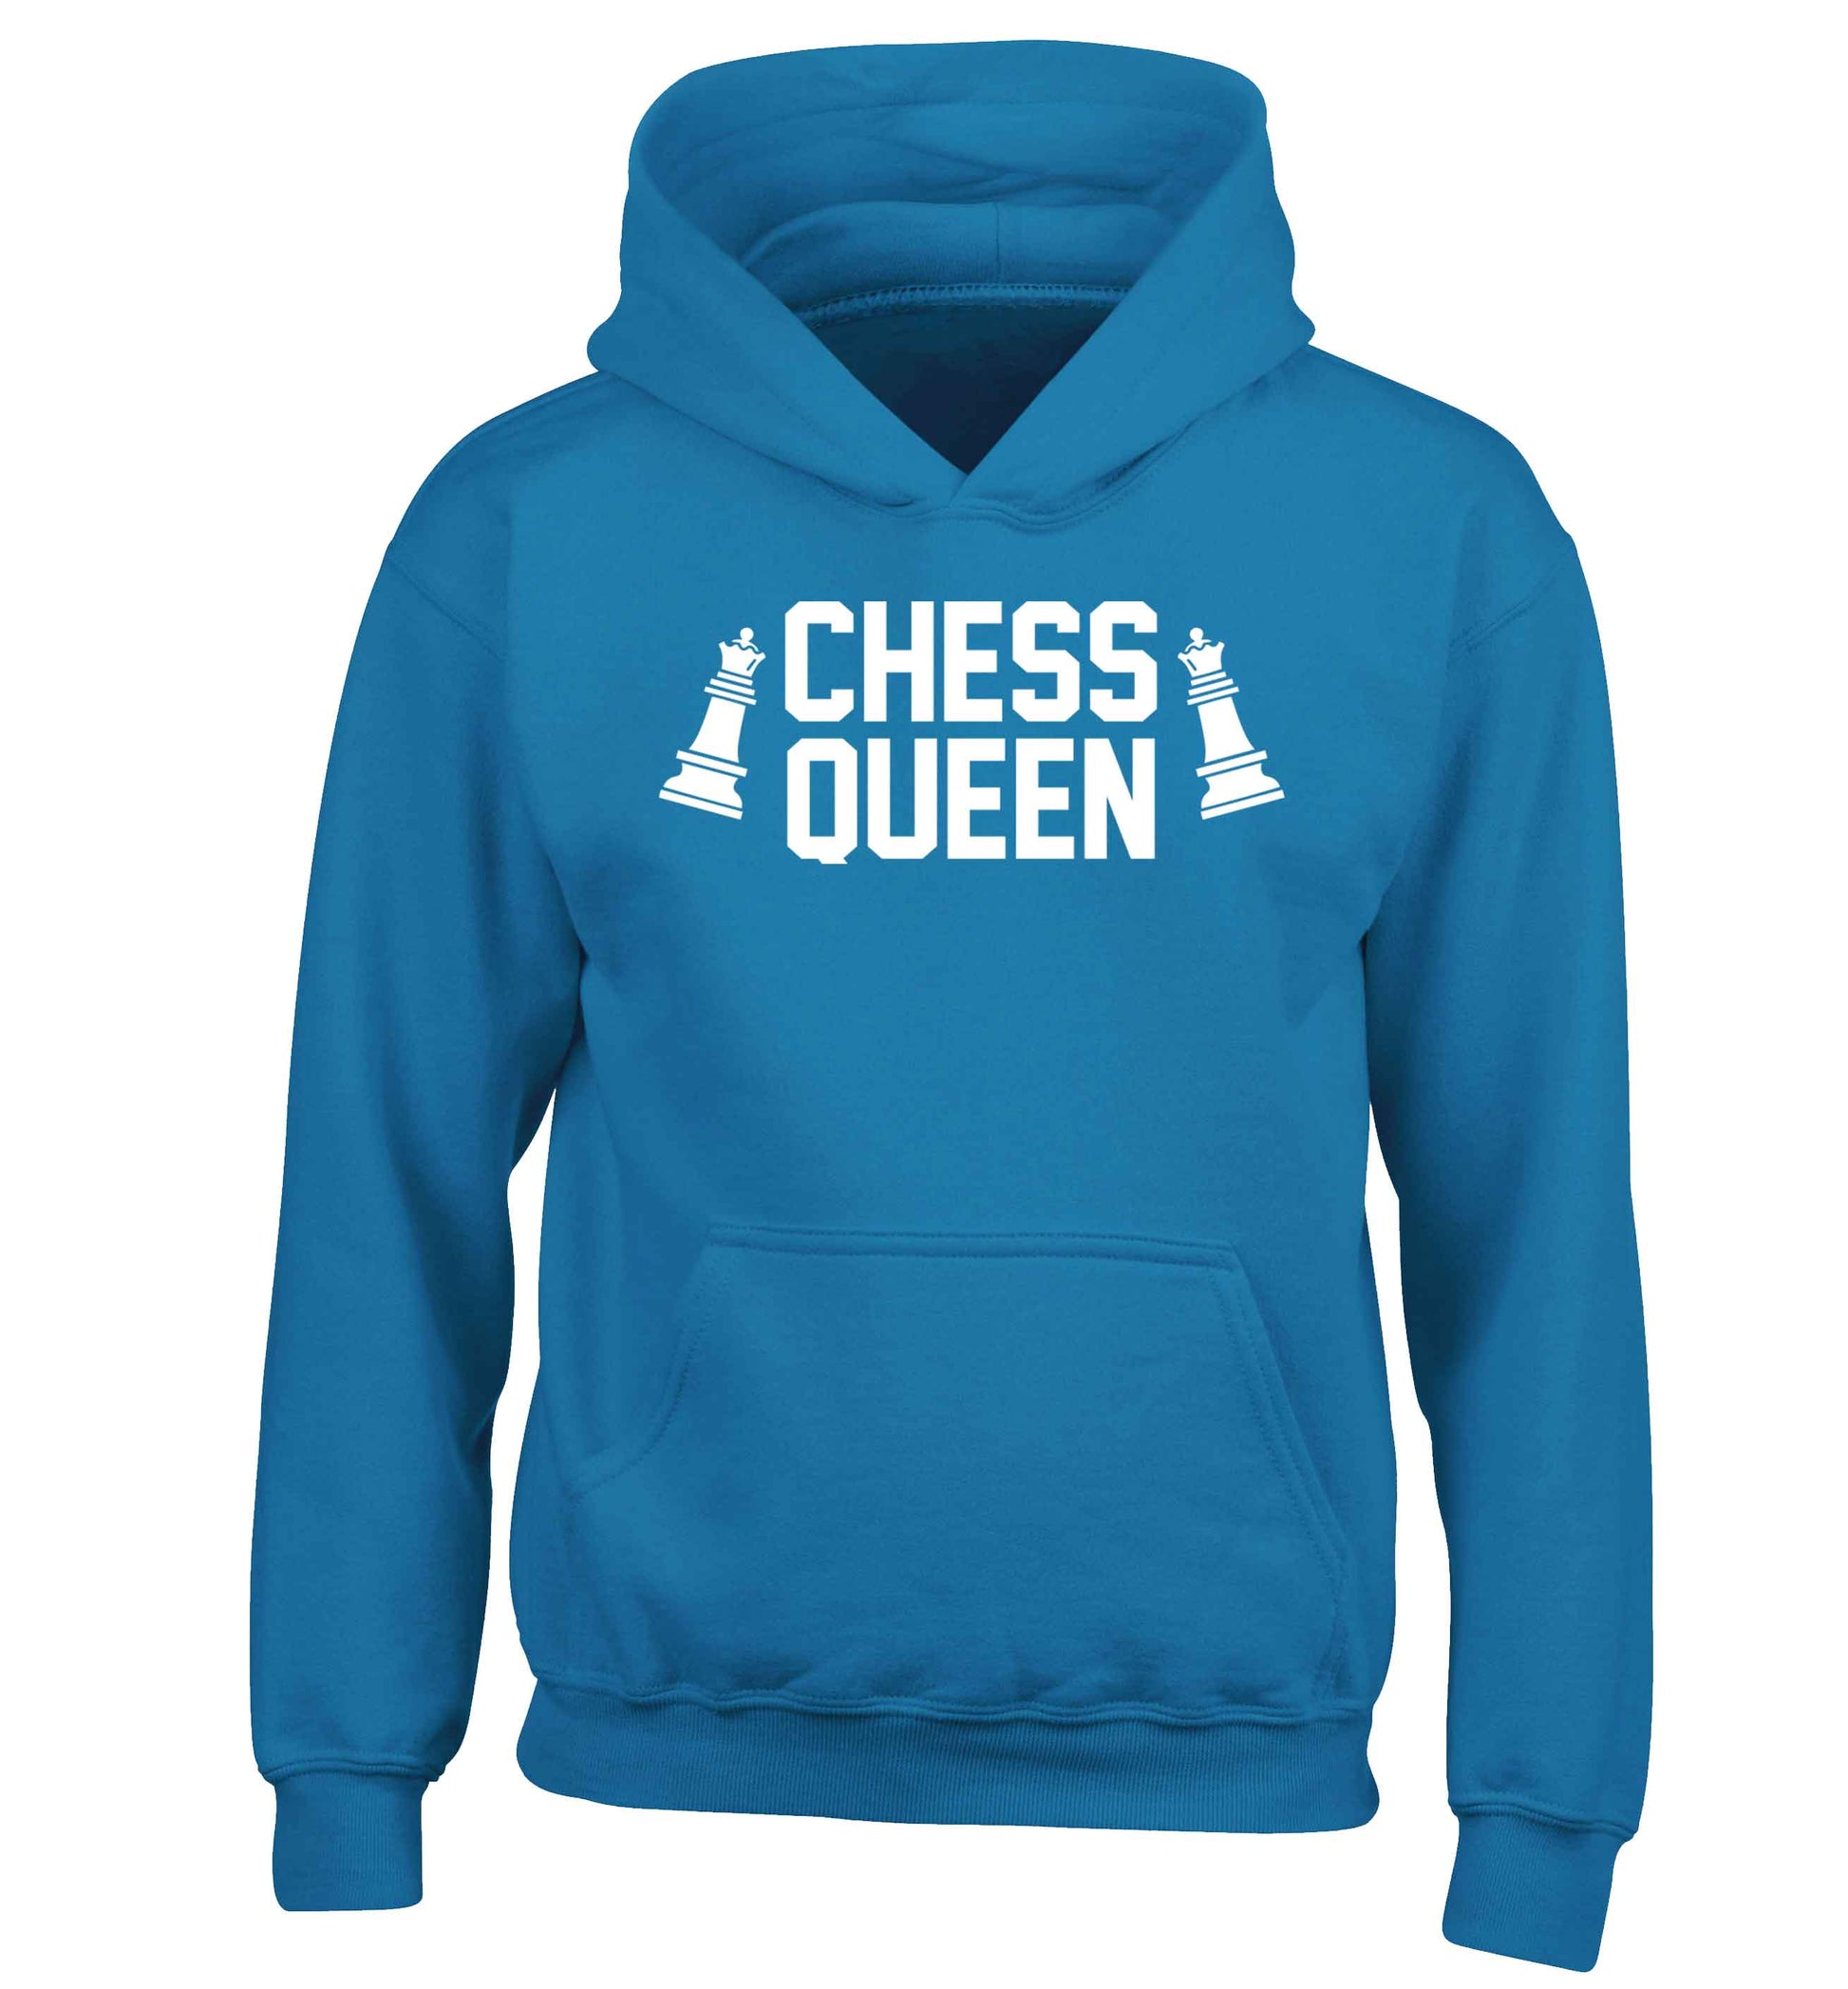 Chess queen children's blue hoodie 12-13 Years